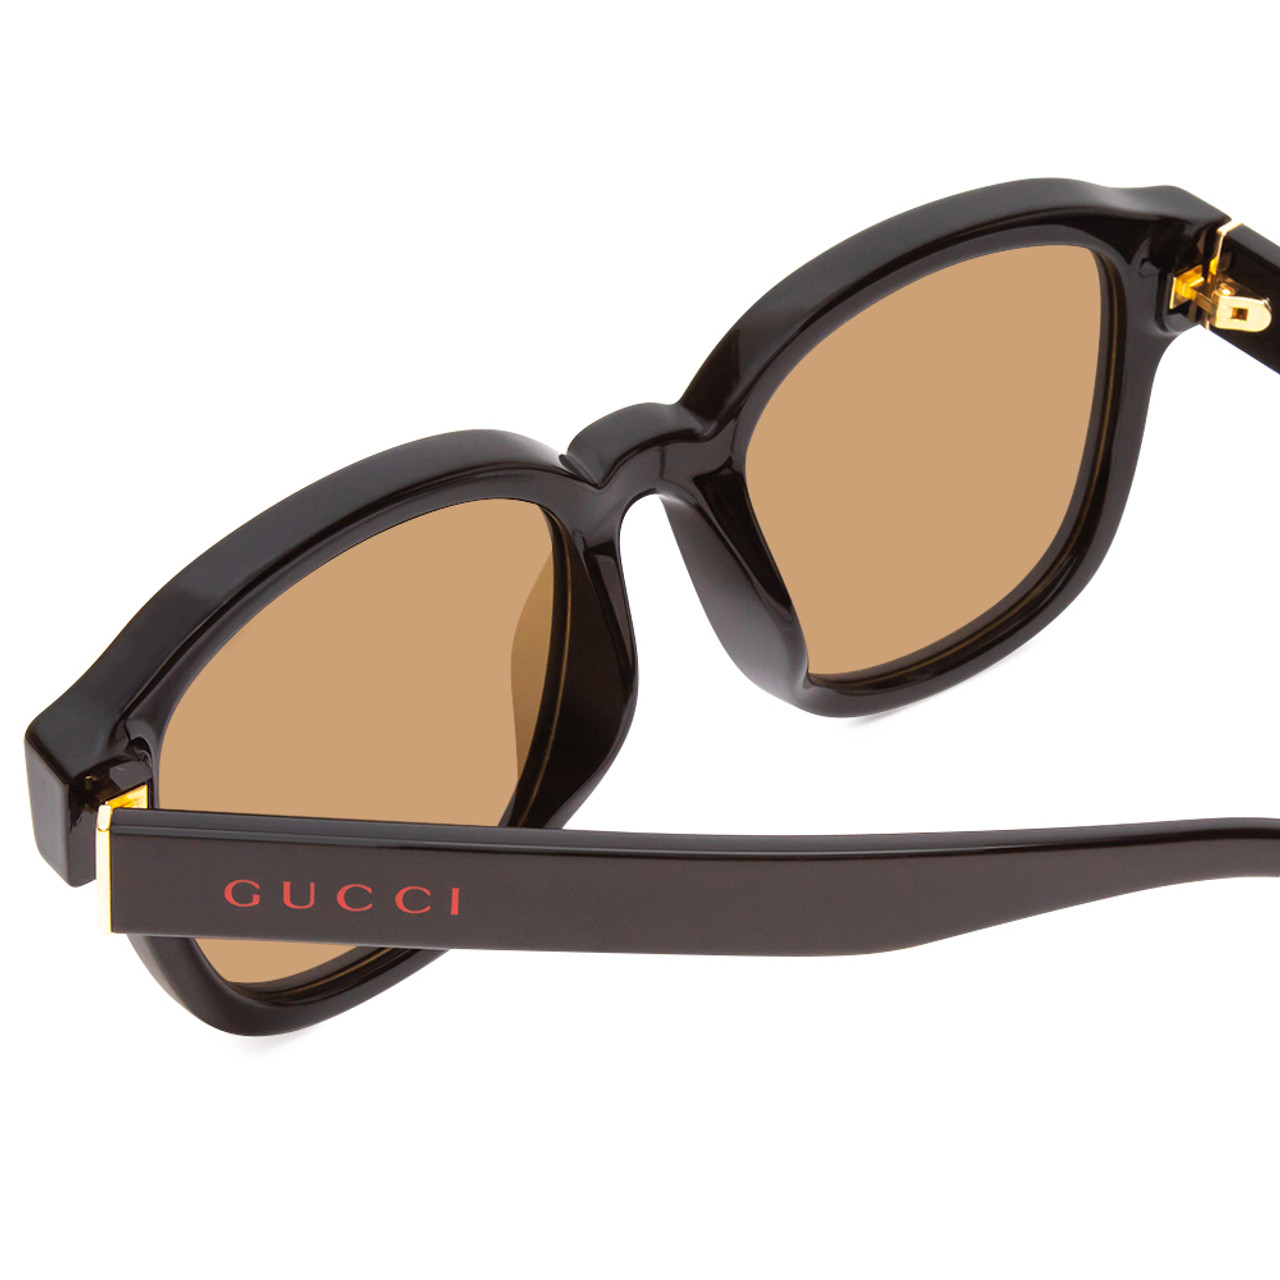 GUCCI GG1140SK-003 Unisex Classic Designer Sunglasses in Black & Gold/Brown  54mm - Speert International